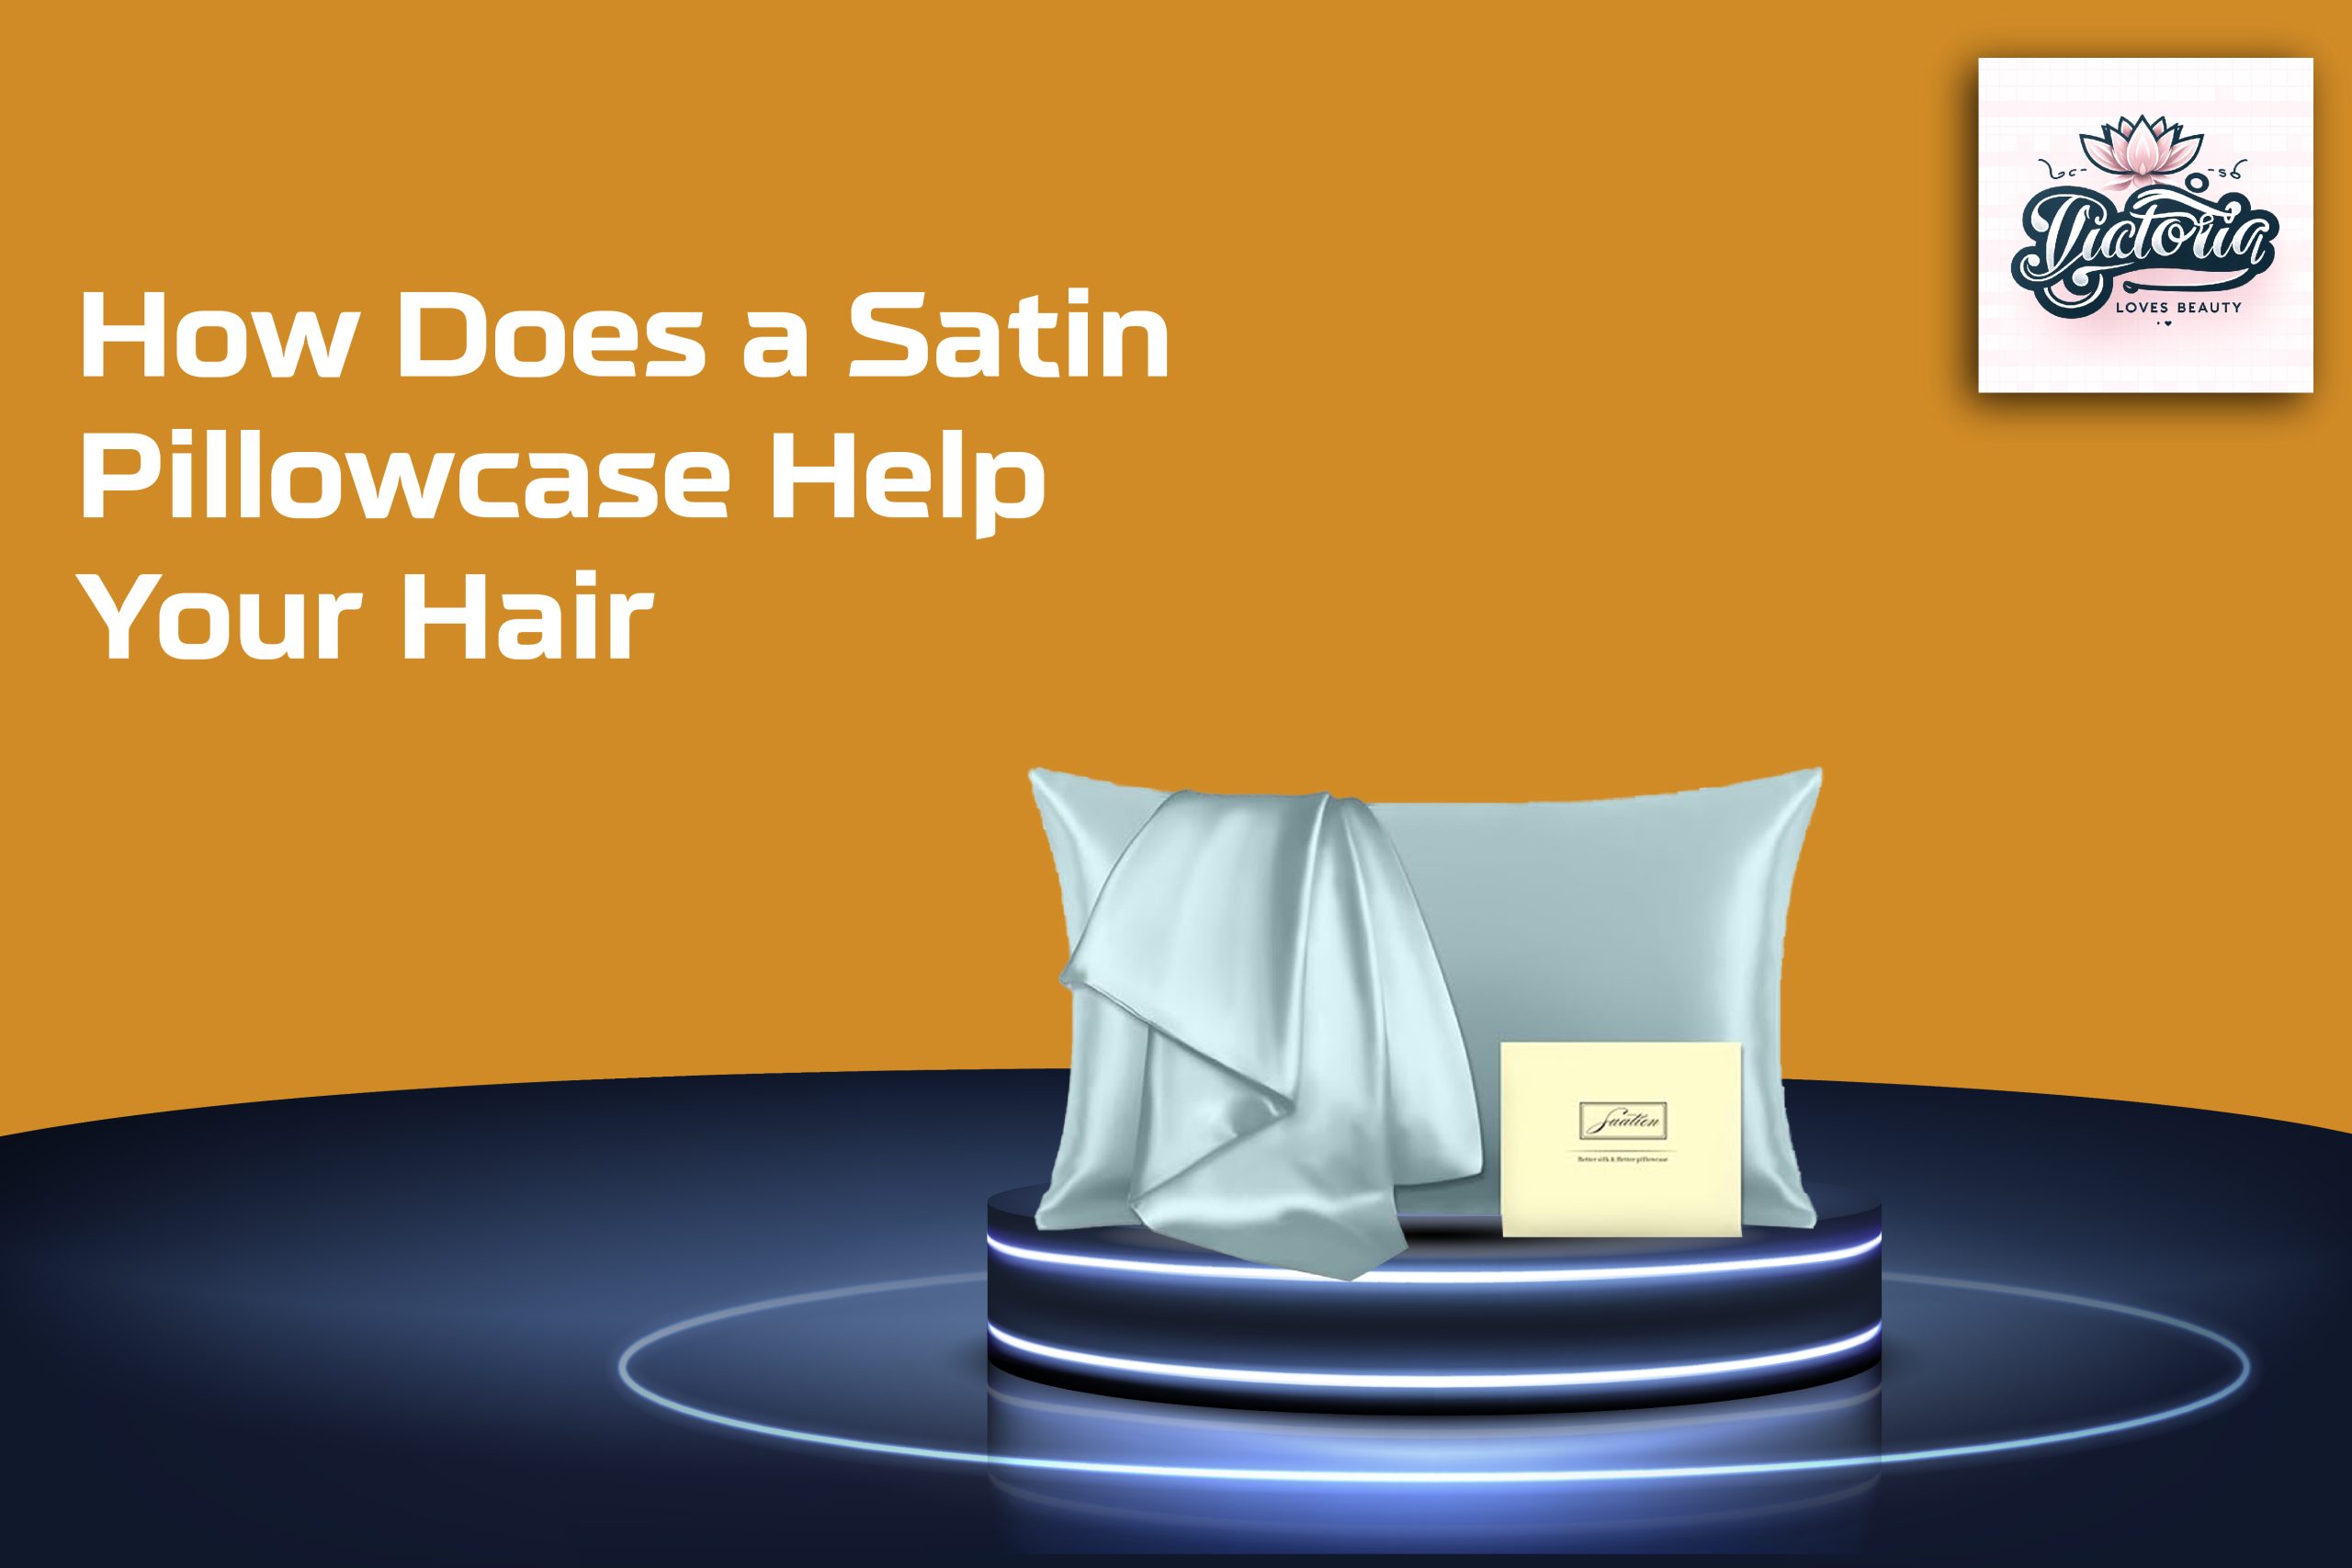 Does a Satin Pillowcase Help Your Hair